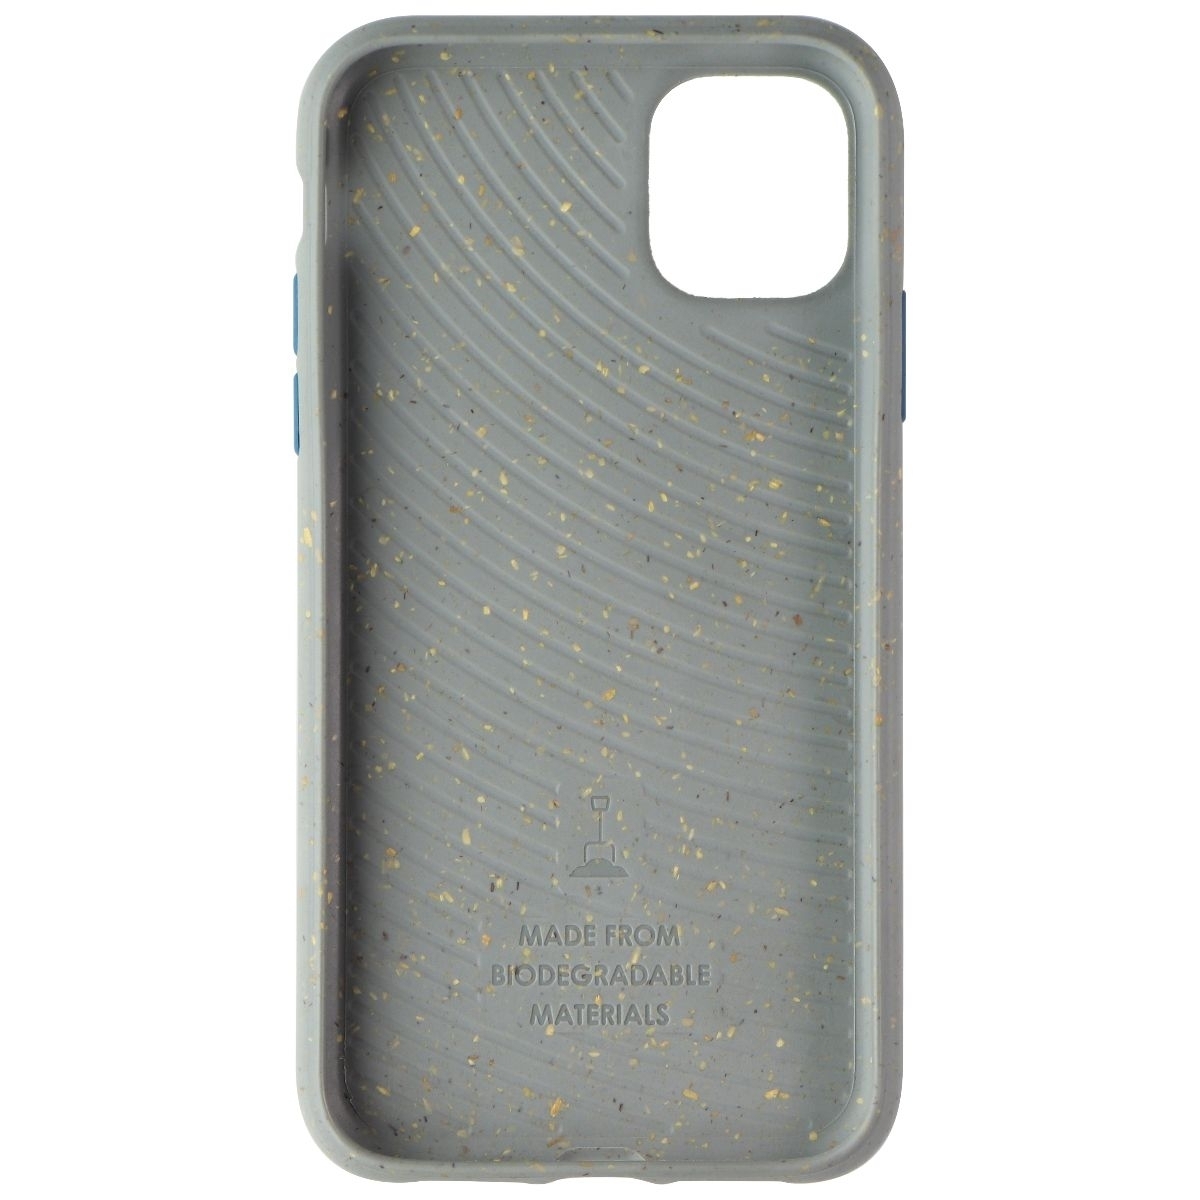 Tech21 EcoSlim Bio-Degradable Flexible Protection Case For IPhone 11 - Gray (Refurbished)